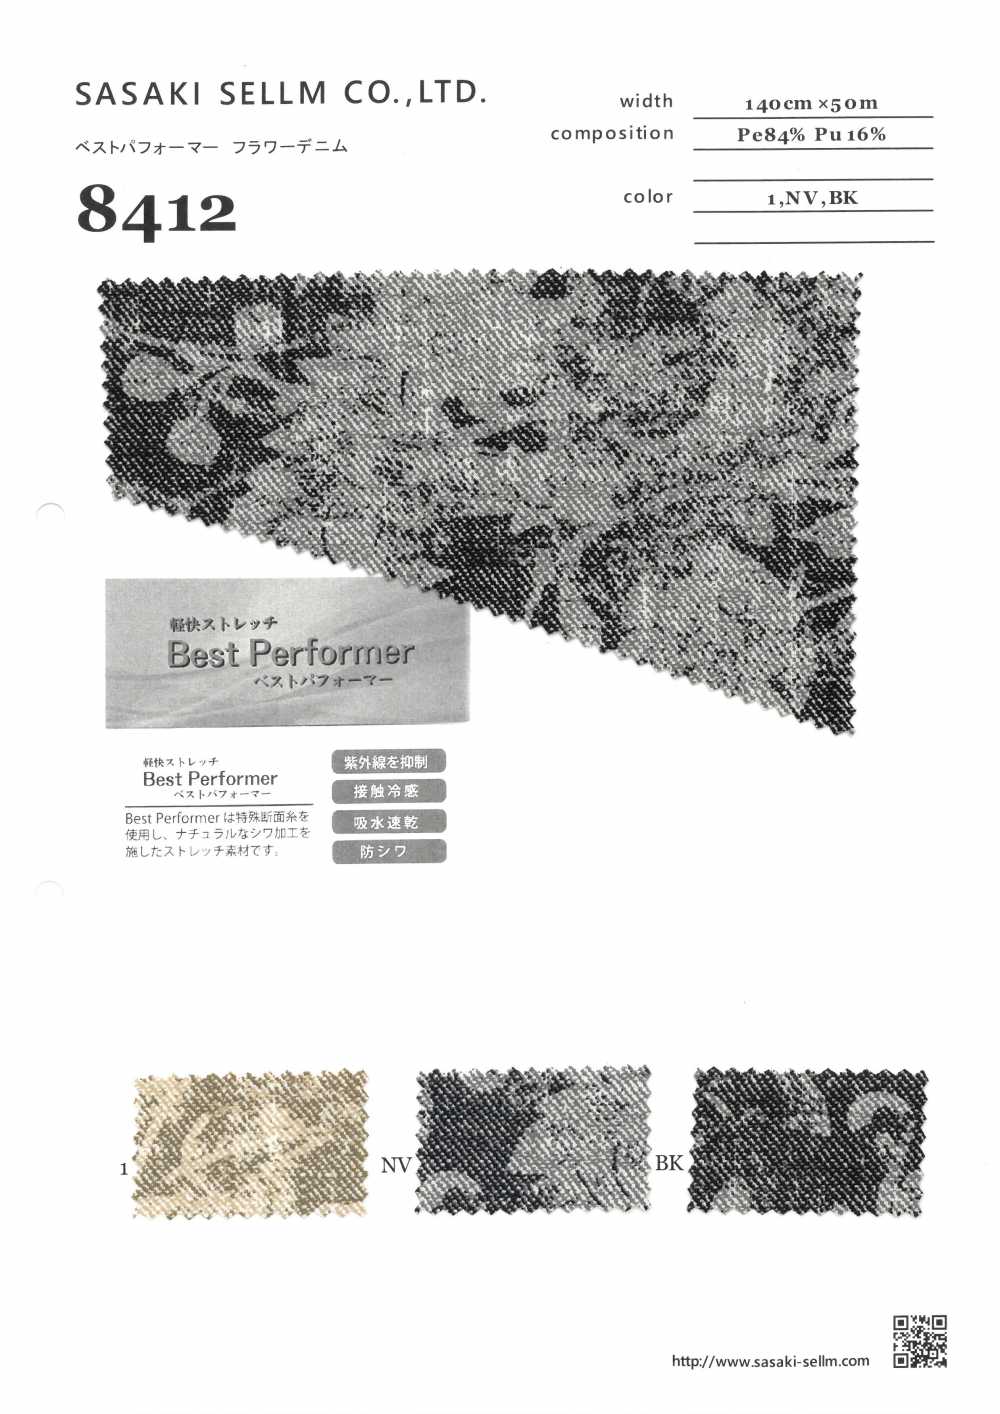 8412 Weste Performer Flower Denim[Textilgewebe] SASAKISELLM